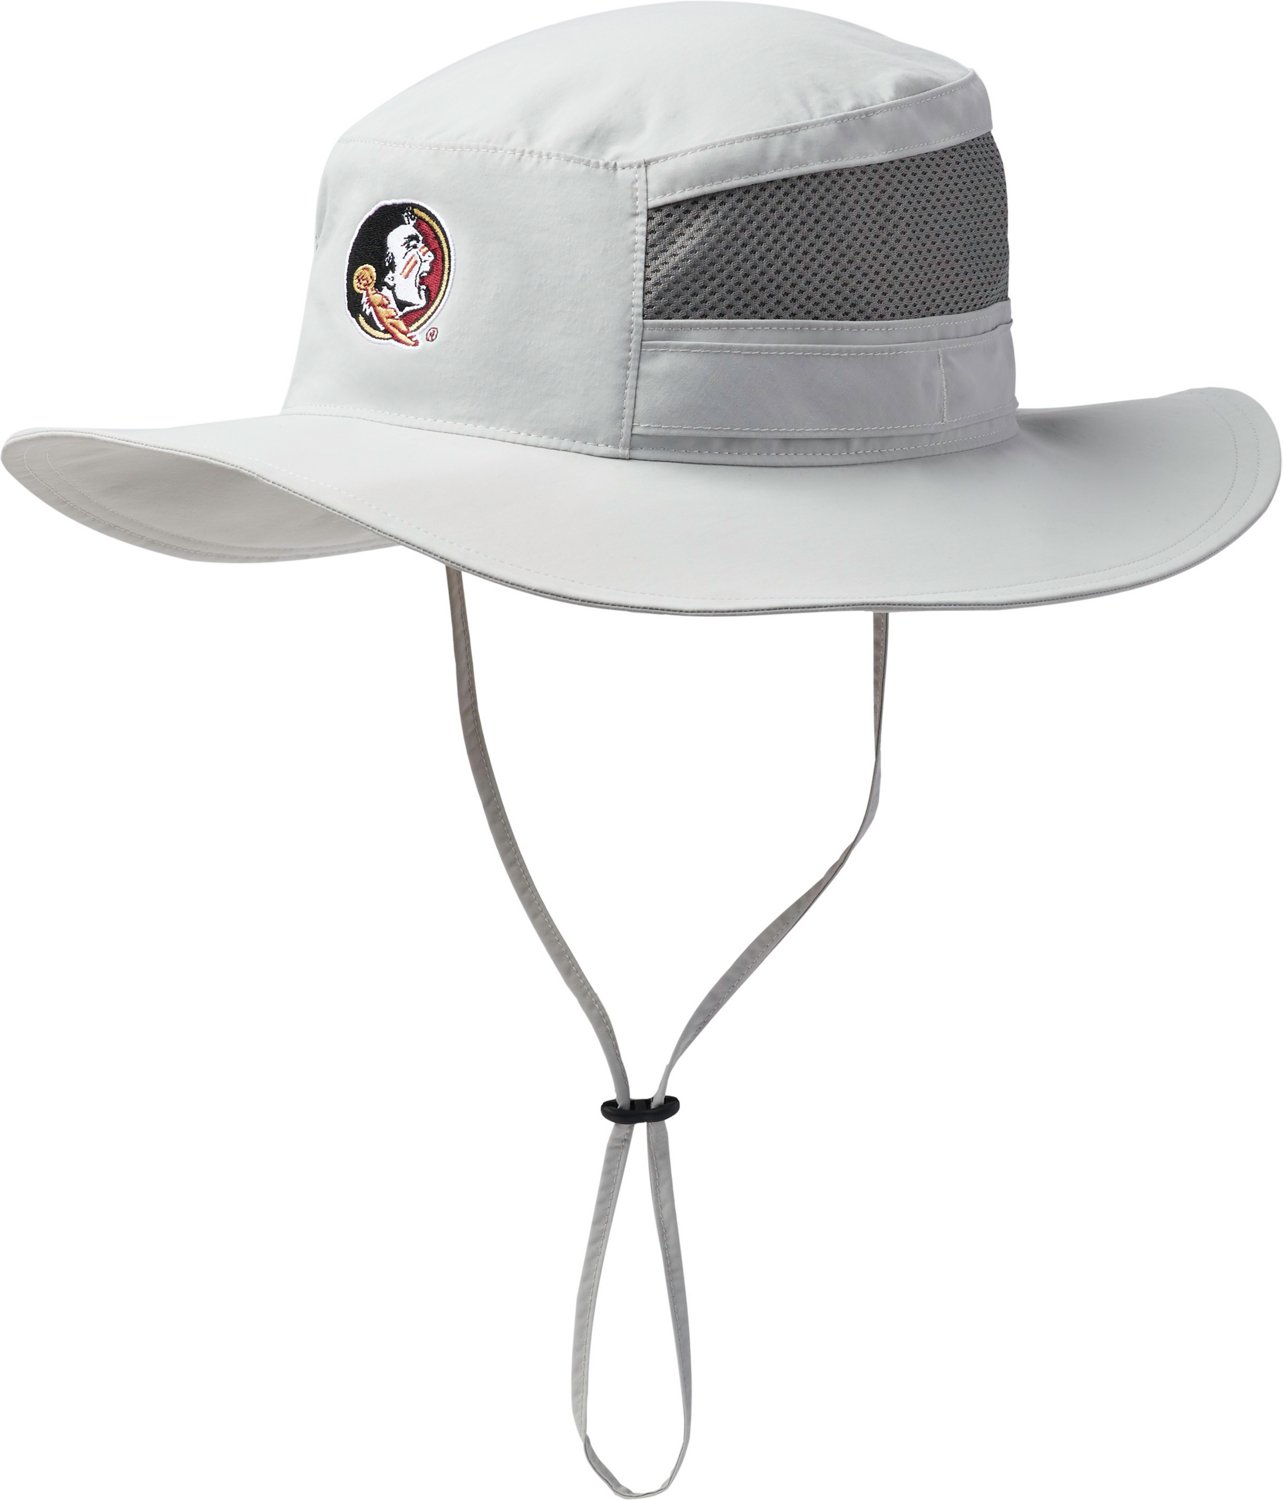 Columbia Sportswear Men's Bora Booney Hat